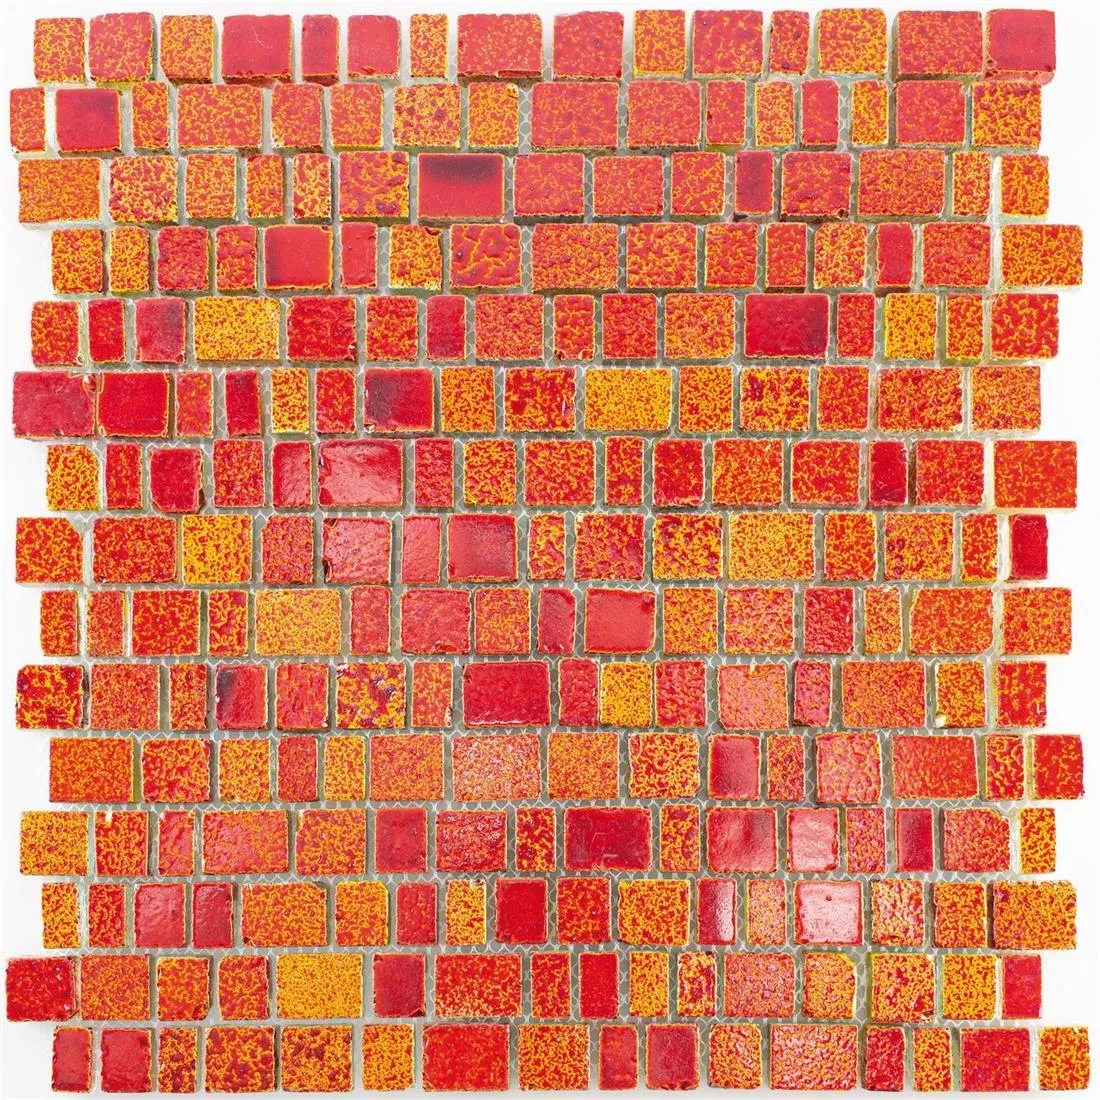 Staklo Mozaik Pločice Economy Crvena Žuta